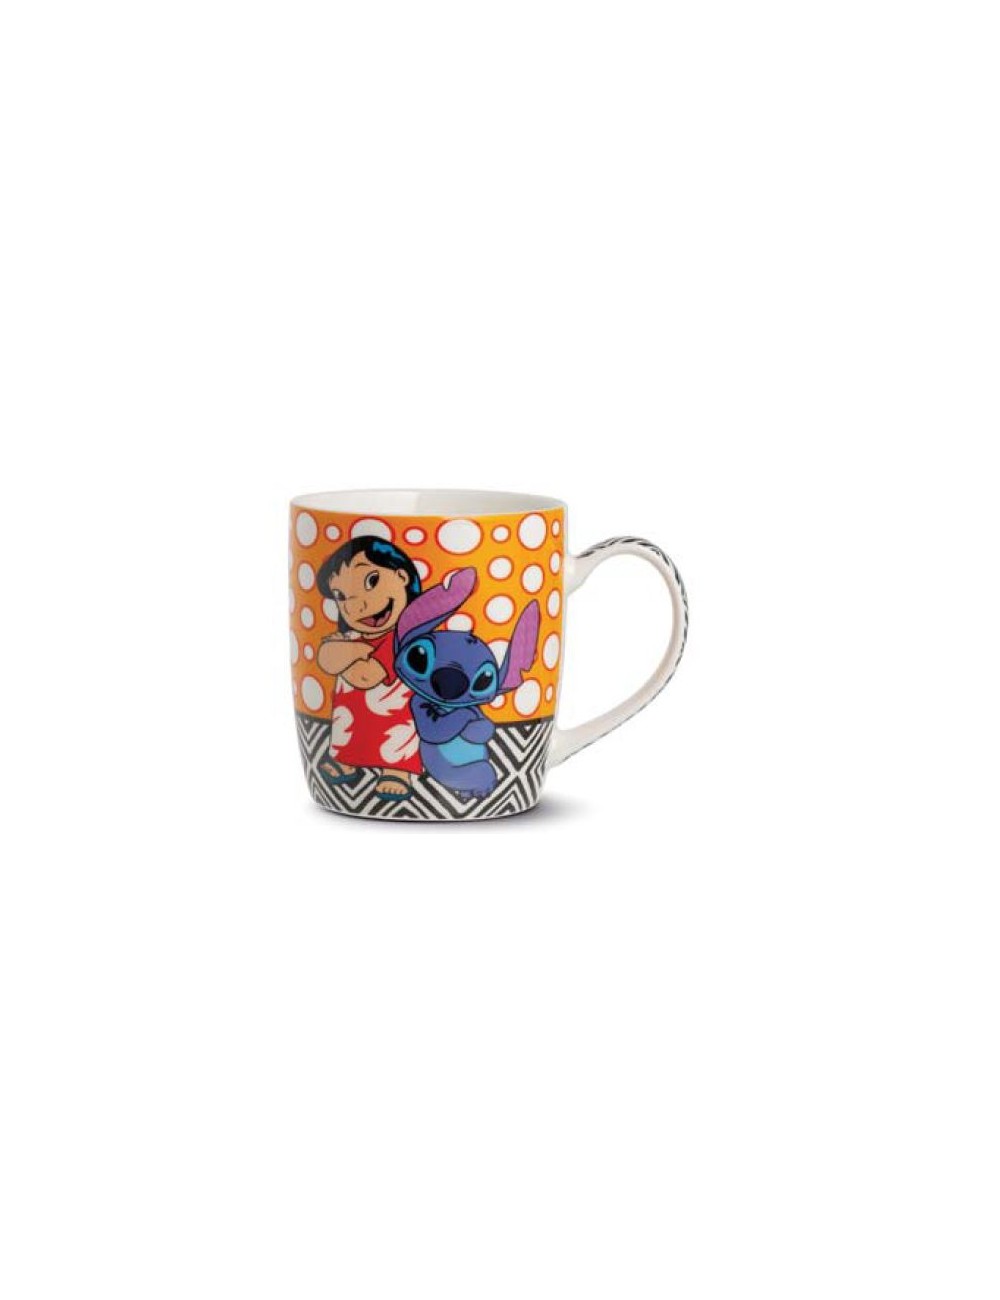 Mug Lilo & Stitch Disney 102011 Egan